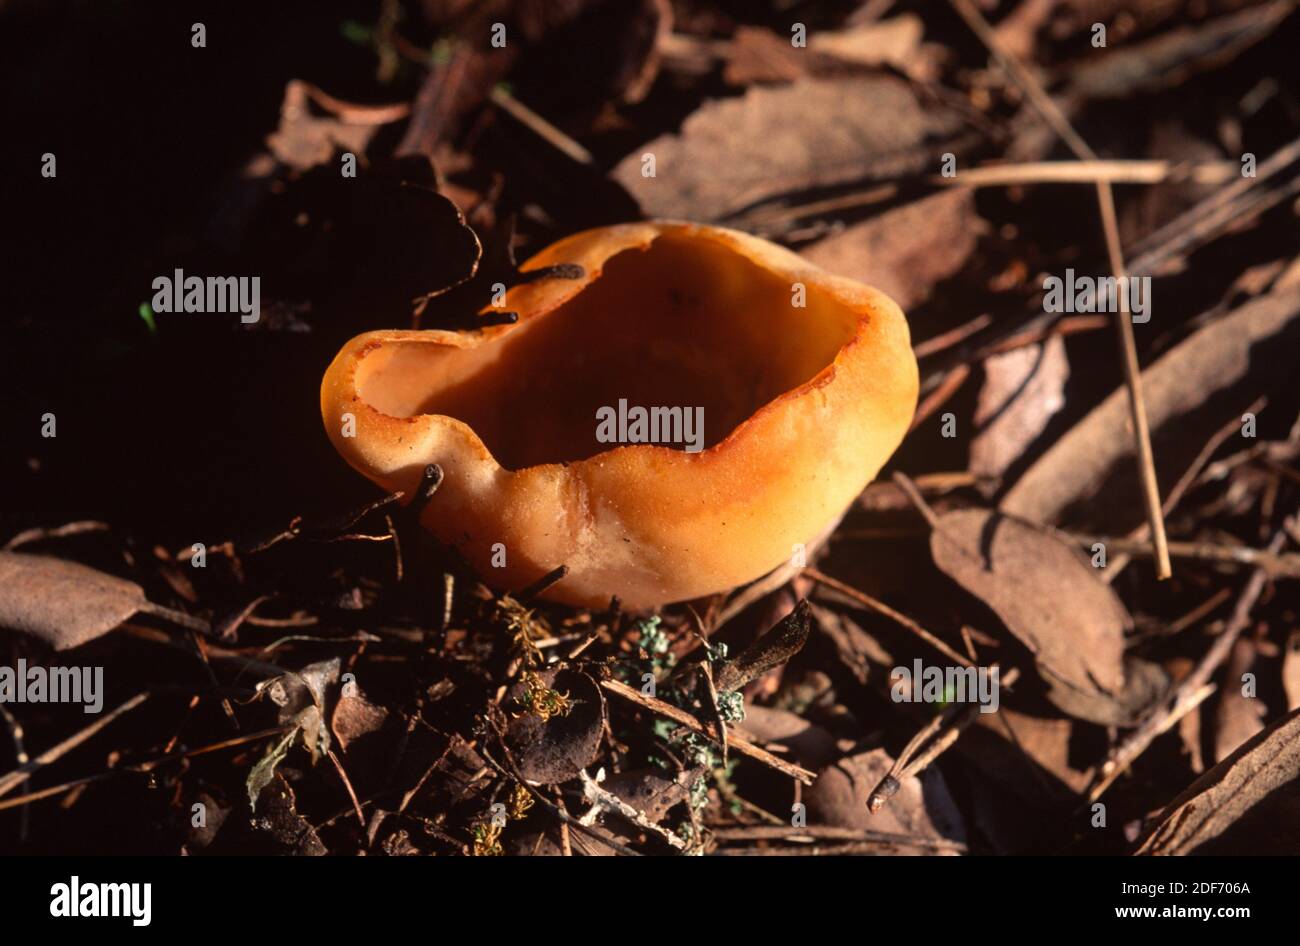 Bay Cup Pilz (Peziza badia) ist ein Pilz giftig auf roh. Stockfoto